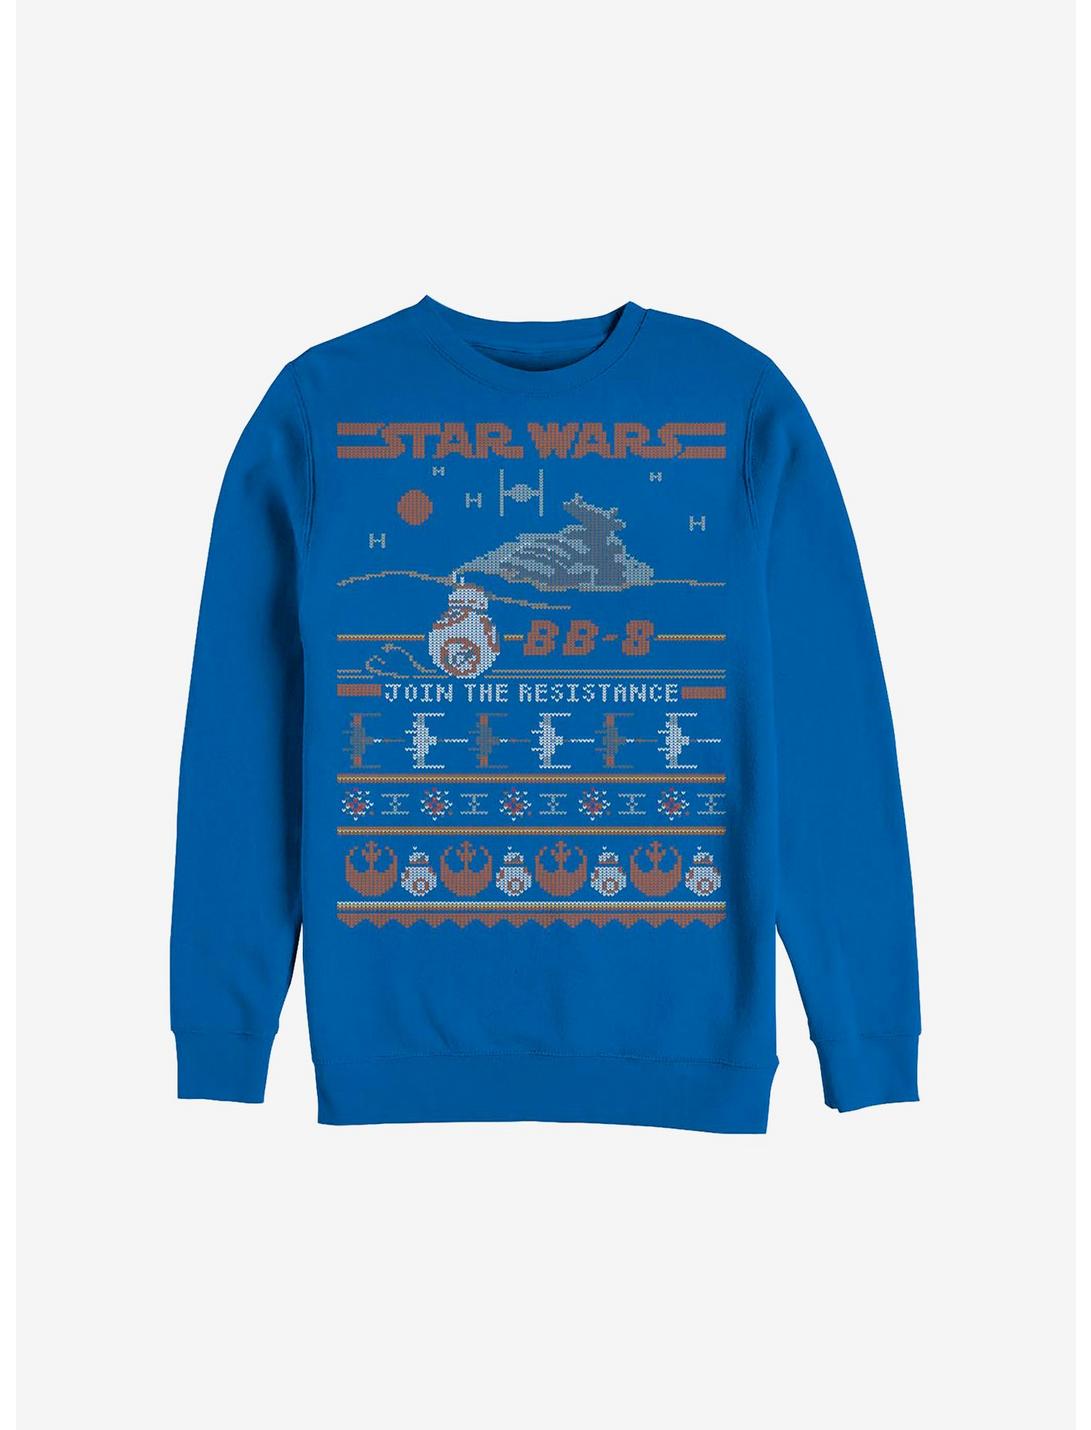 Star Wars BB-8 Resistance Ugly Christmas Sweater Sweatshirt, ROYAL, hi-res